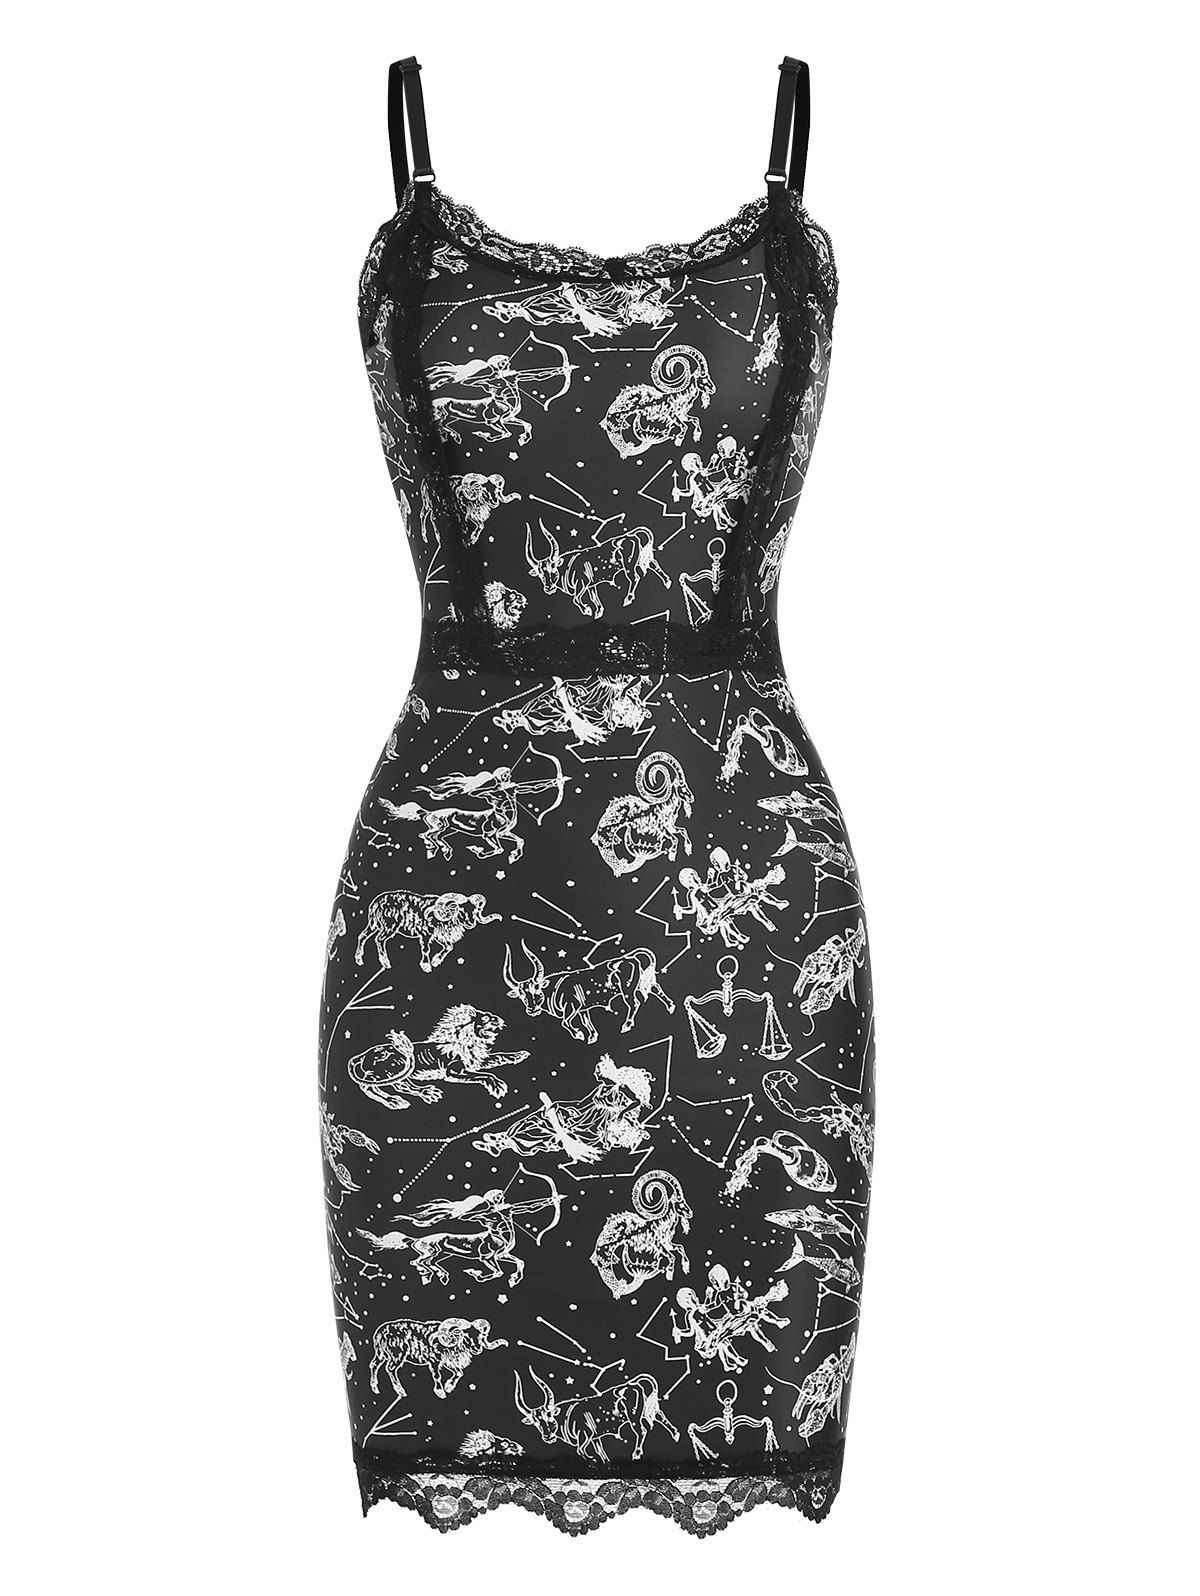 Constellation Animal Print Bodycon Dress Lace Panel Mini Dress Spaghetti Strap Slip Dress - BLACK M